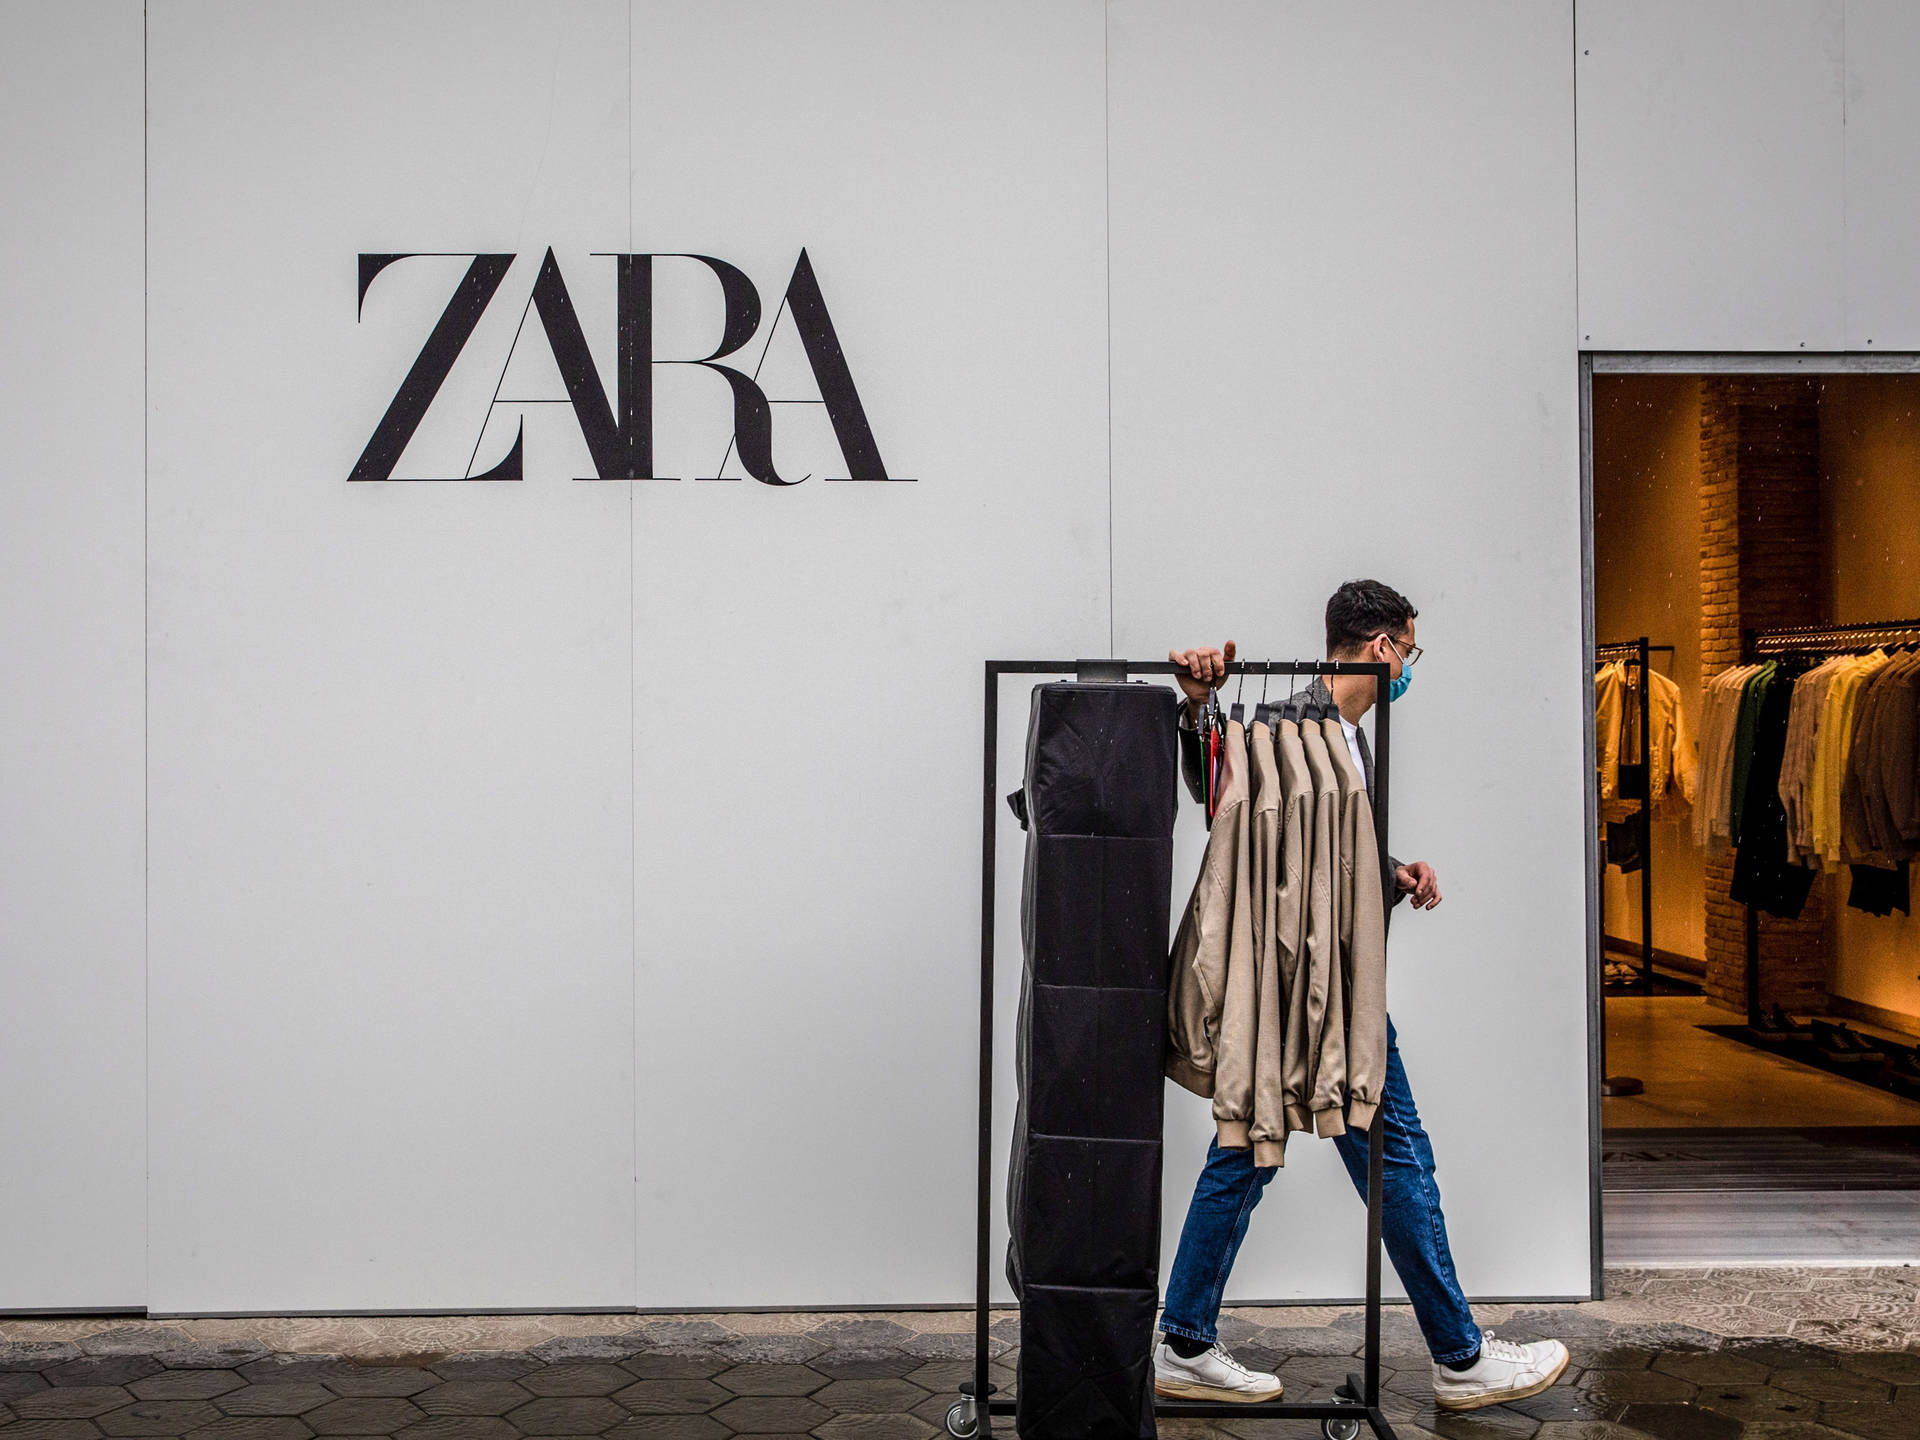 Zara Fashion Chain Store Wallpaper